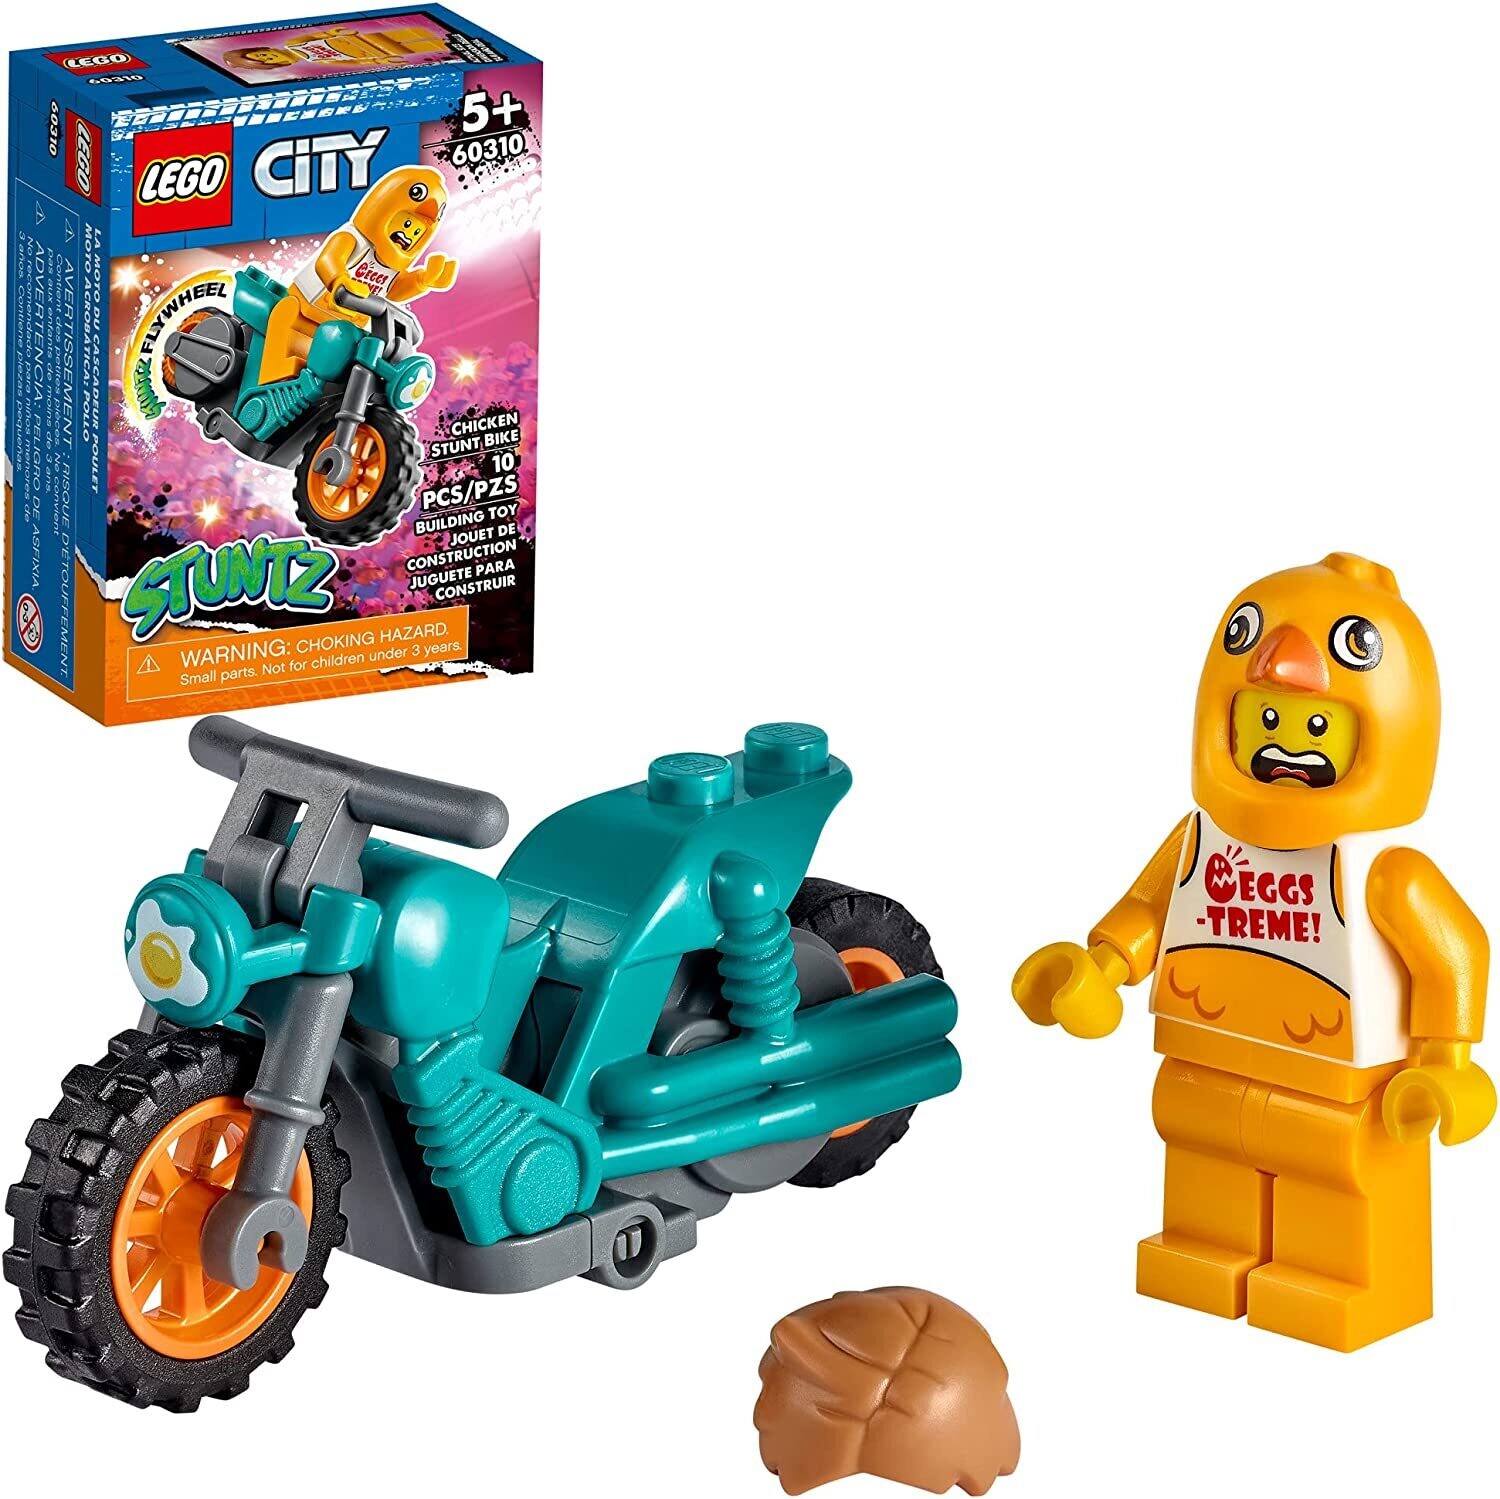 Lego 60310 City Stuntz Chicken Stunt Bike